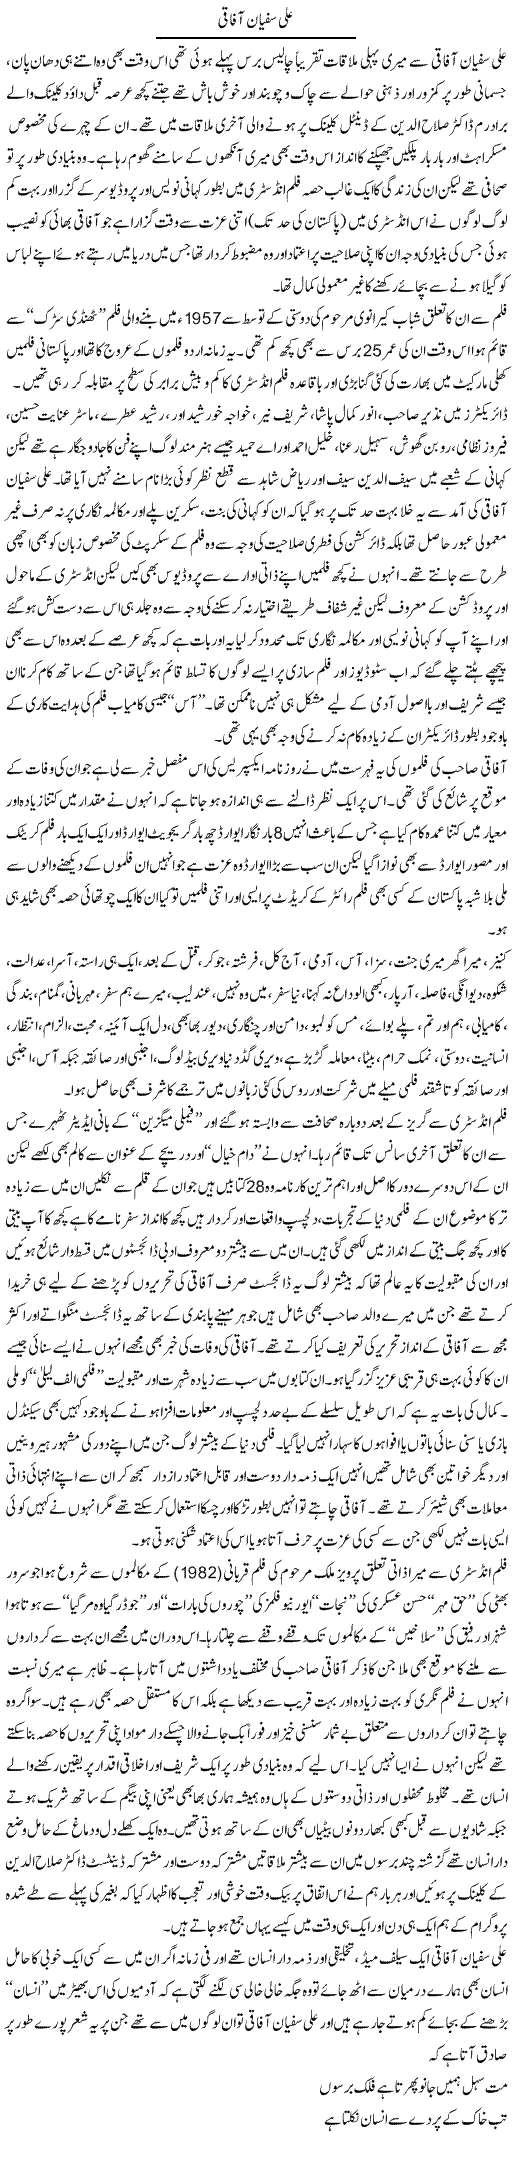 Ali Sufyan Aafaqi | Amjad Islam Amjad | Daily Urdu Columns